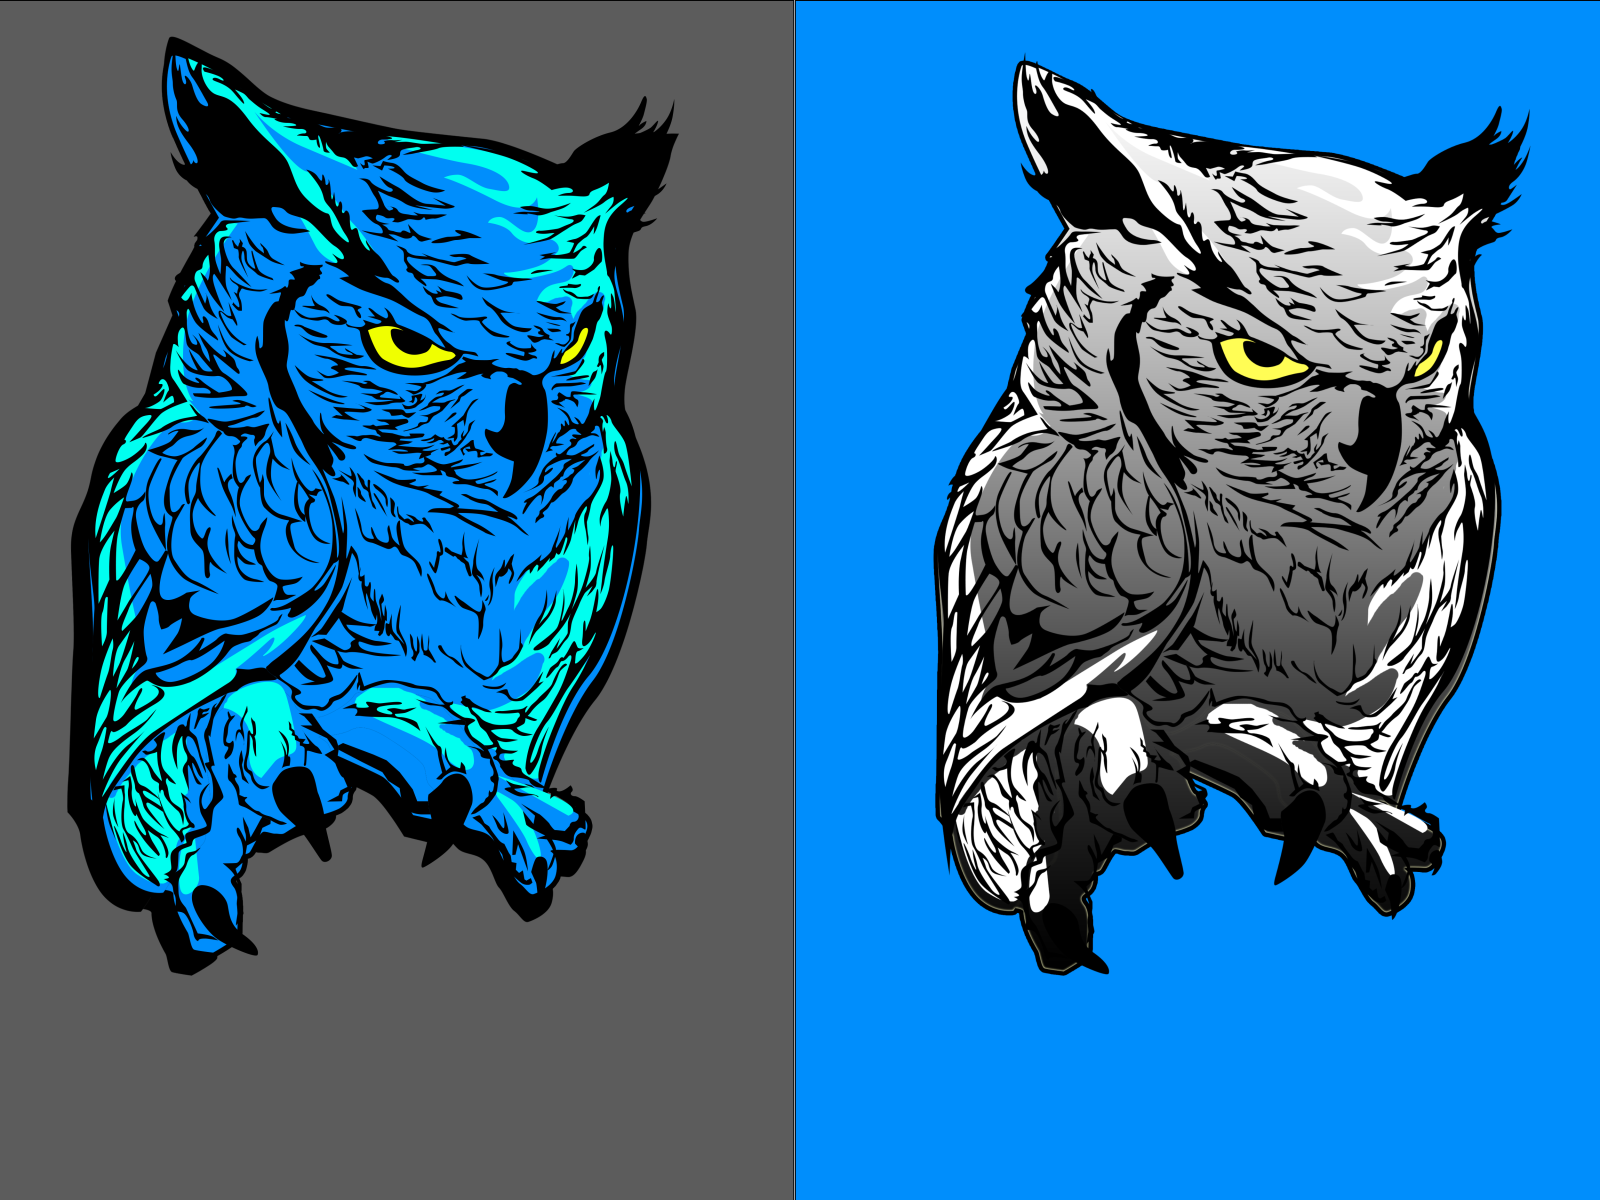 Blue & Grey Owls by Rizka Indarto on Dribbble